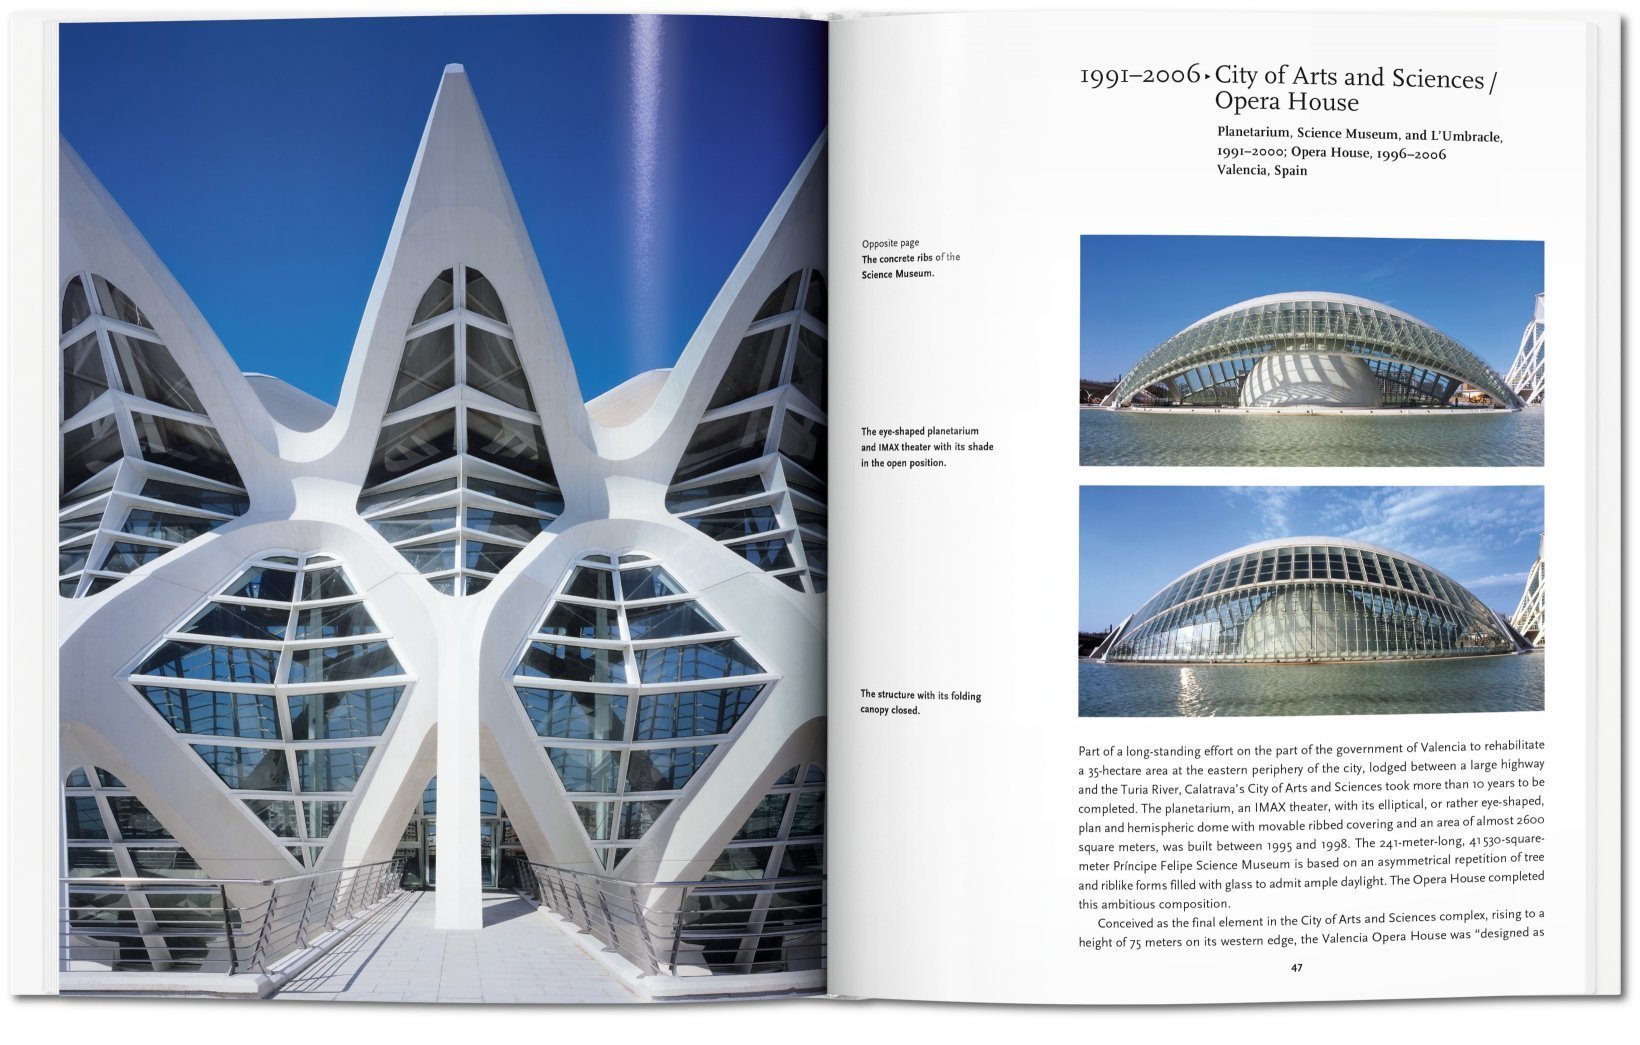 Calatrava - Basic Art Series